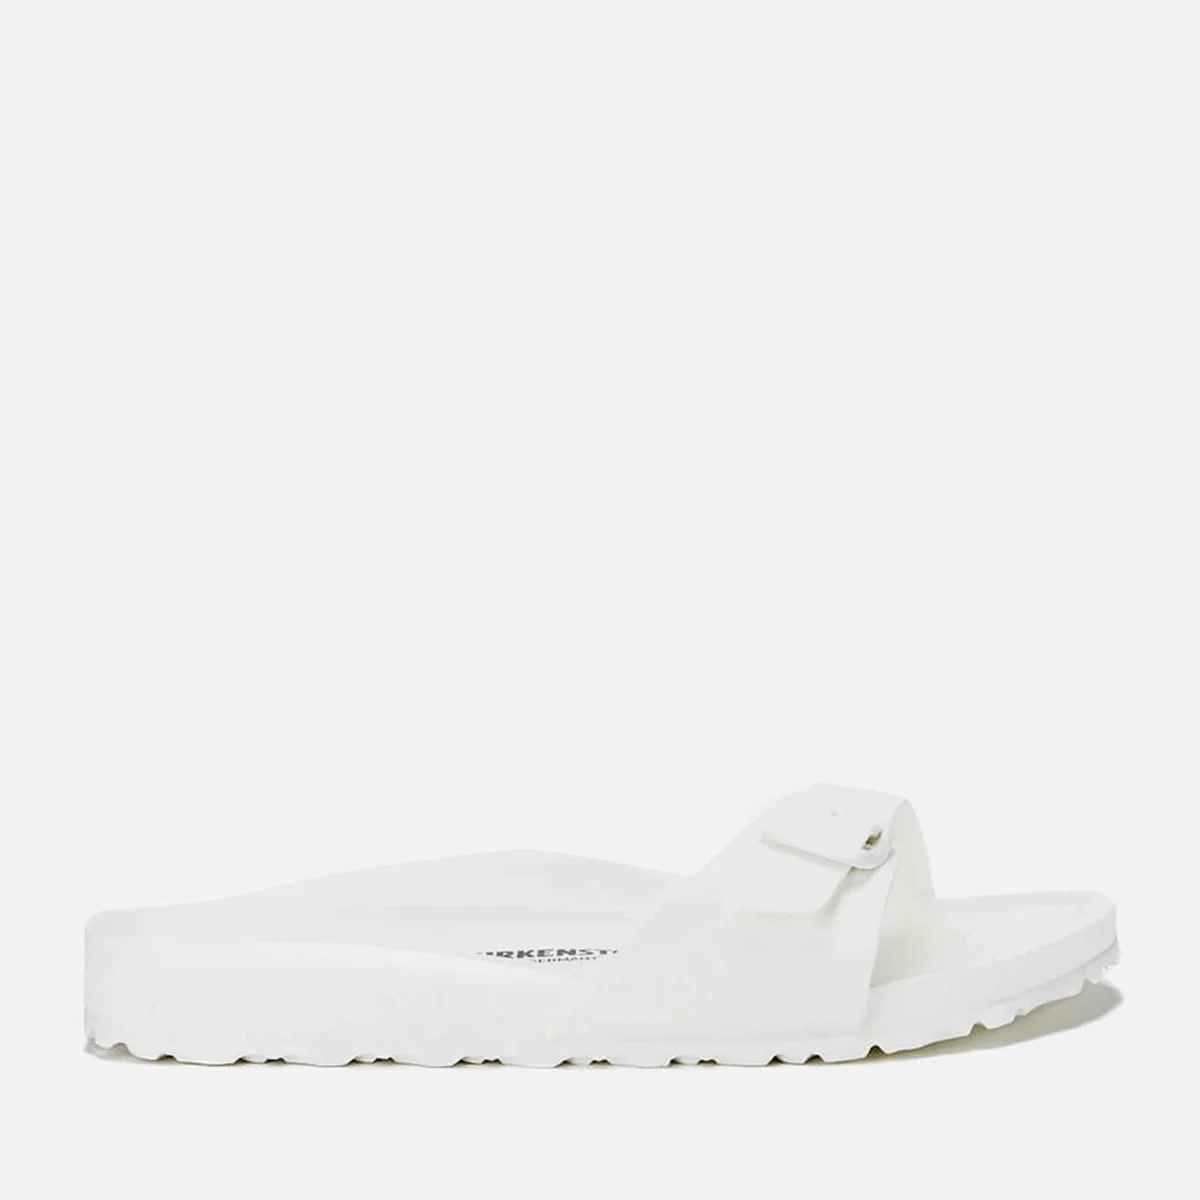 Birkenstock Women's Madrid Slim Fit Eva Single Strap Sandals - White Image 1